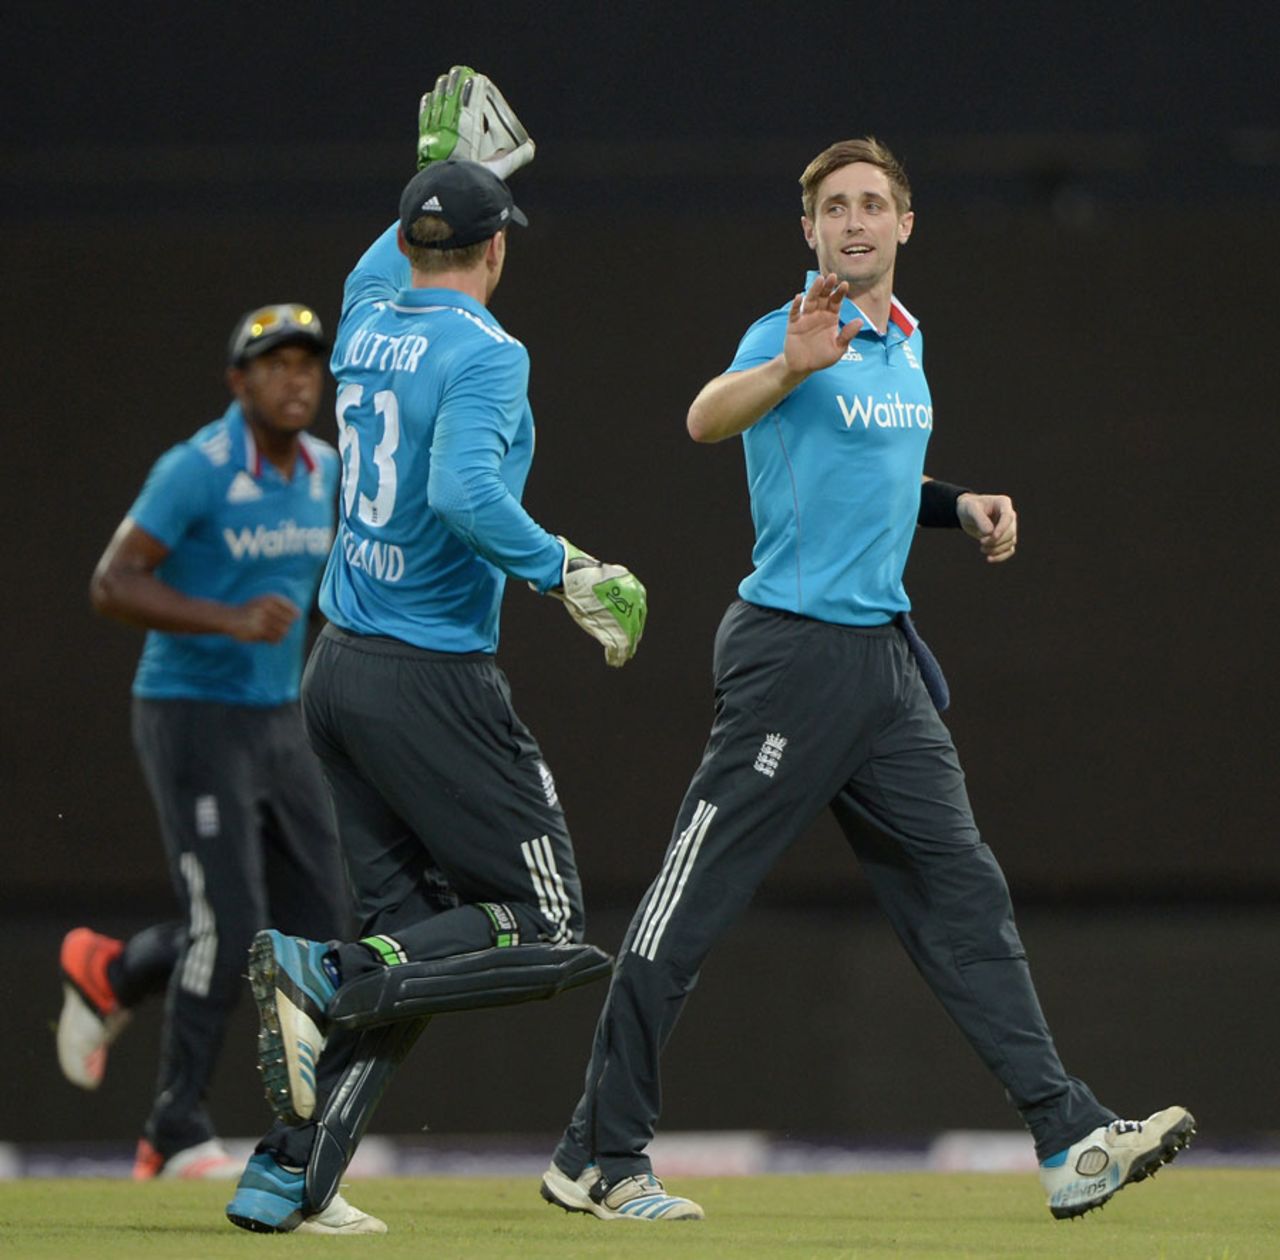 Chris Woakes collected 6 for 47, Sri Lanka v England, 5th ODI, Pallekele, December 10, 2014